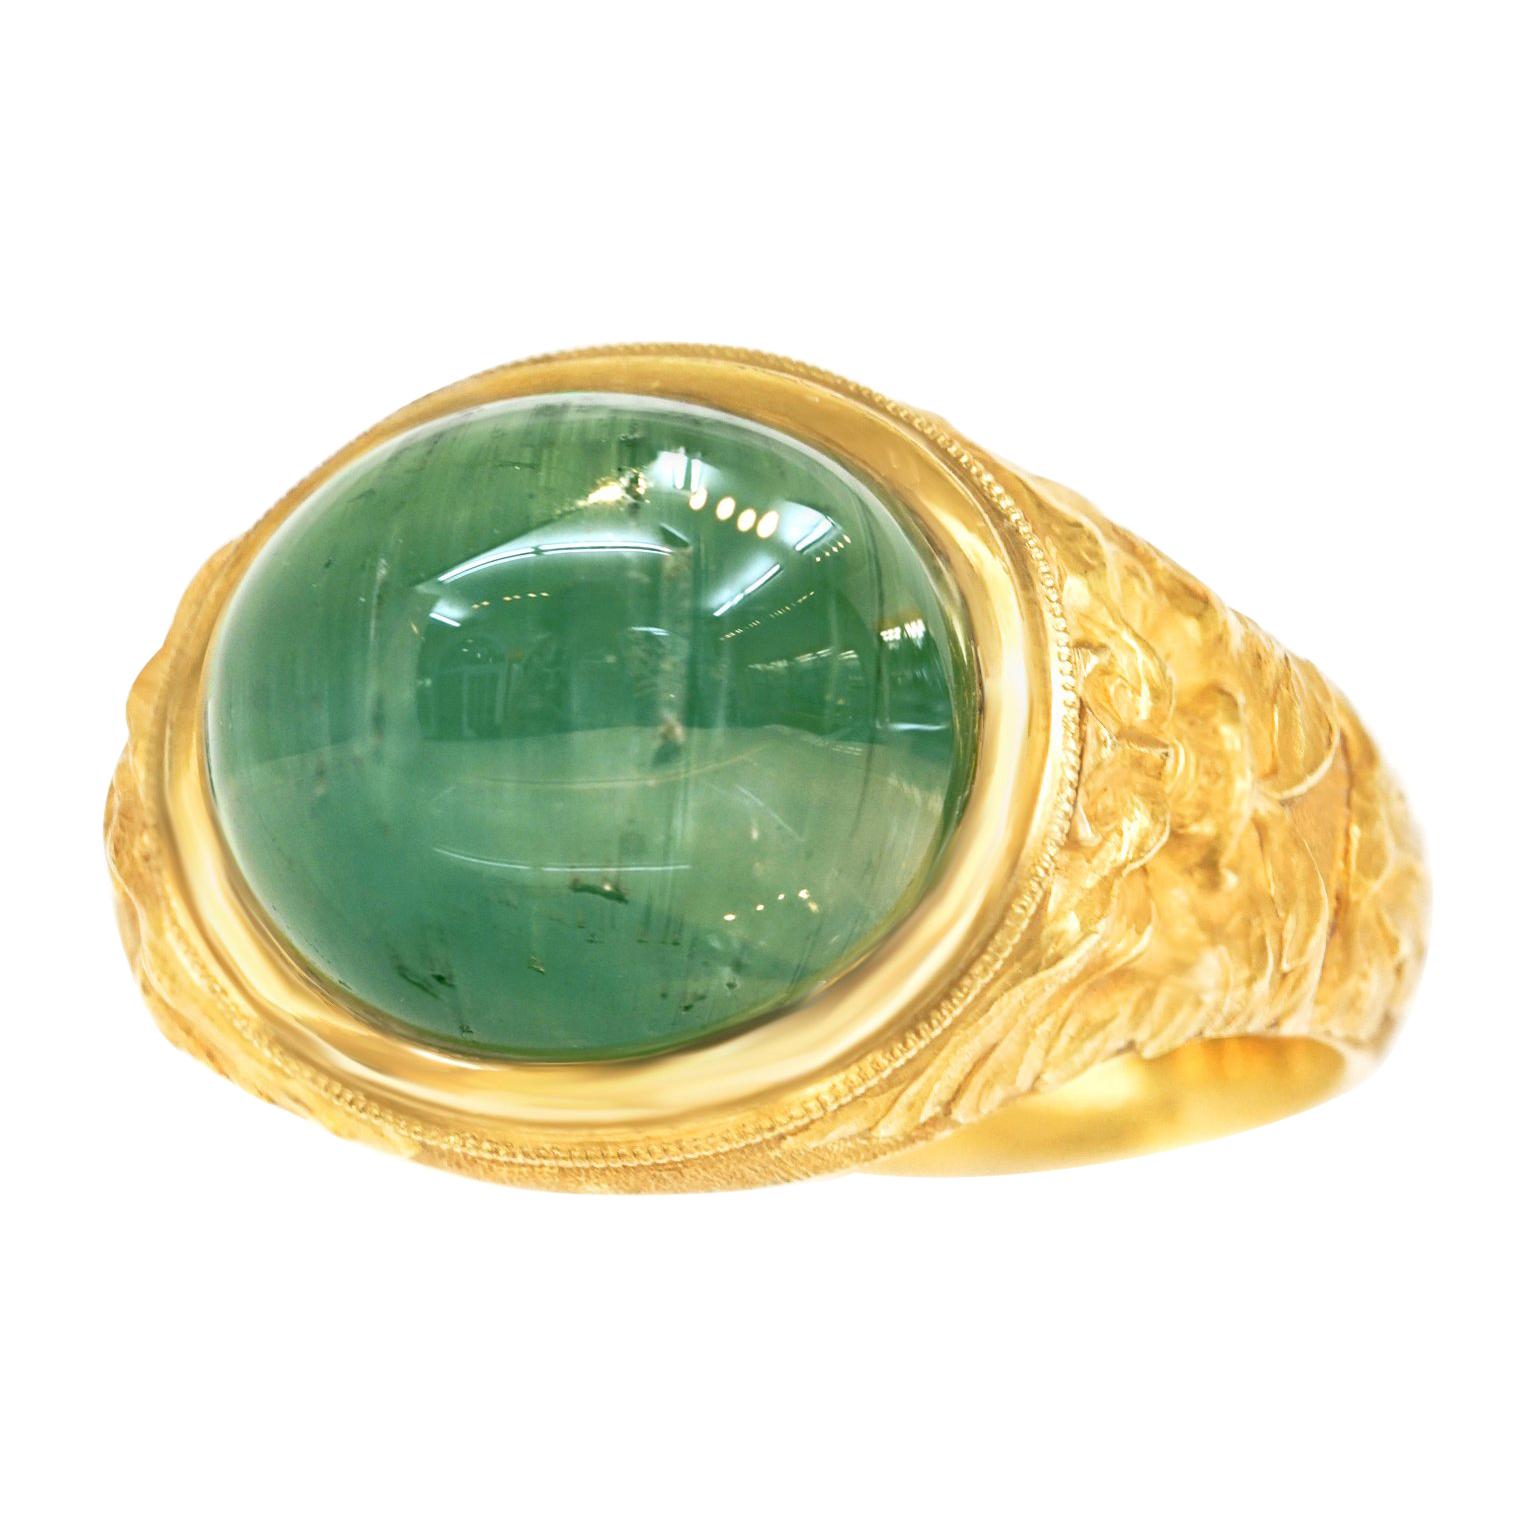 Paul Lantuch Renaissance Revival Gold Ring